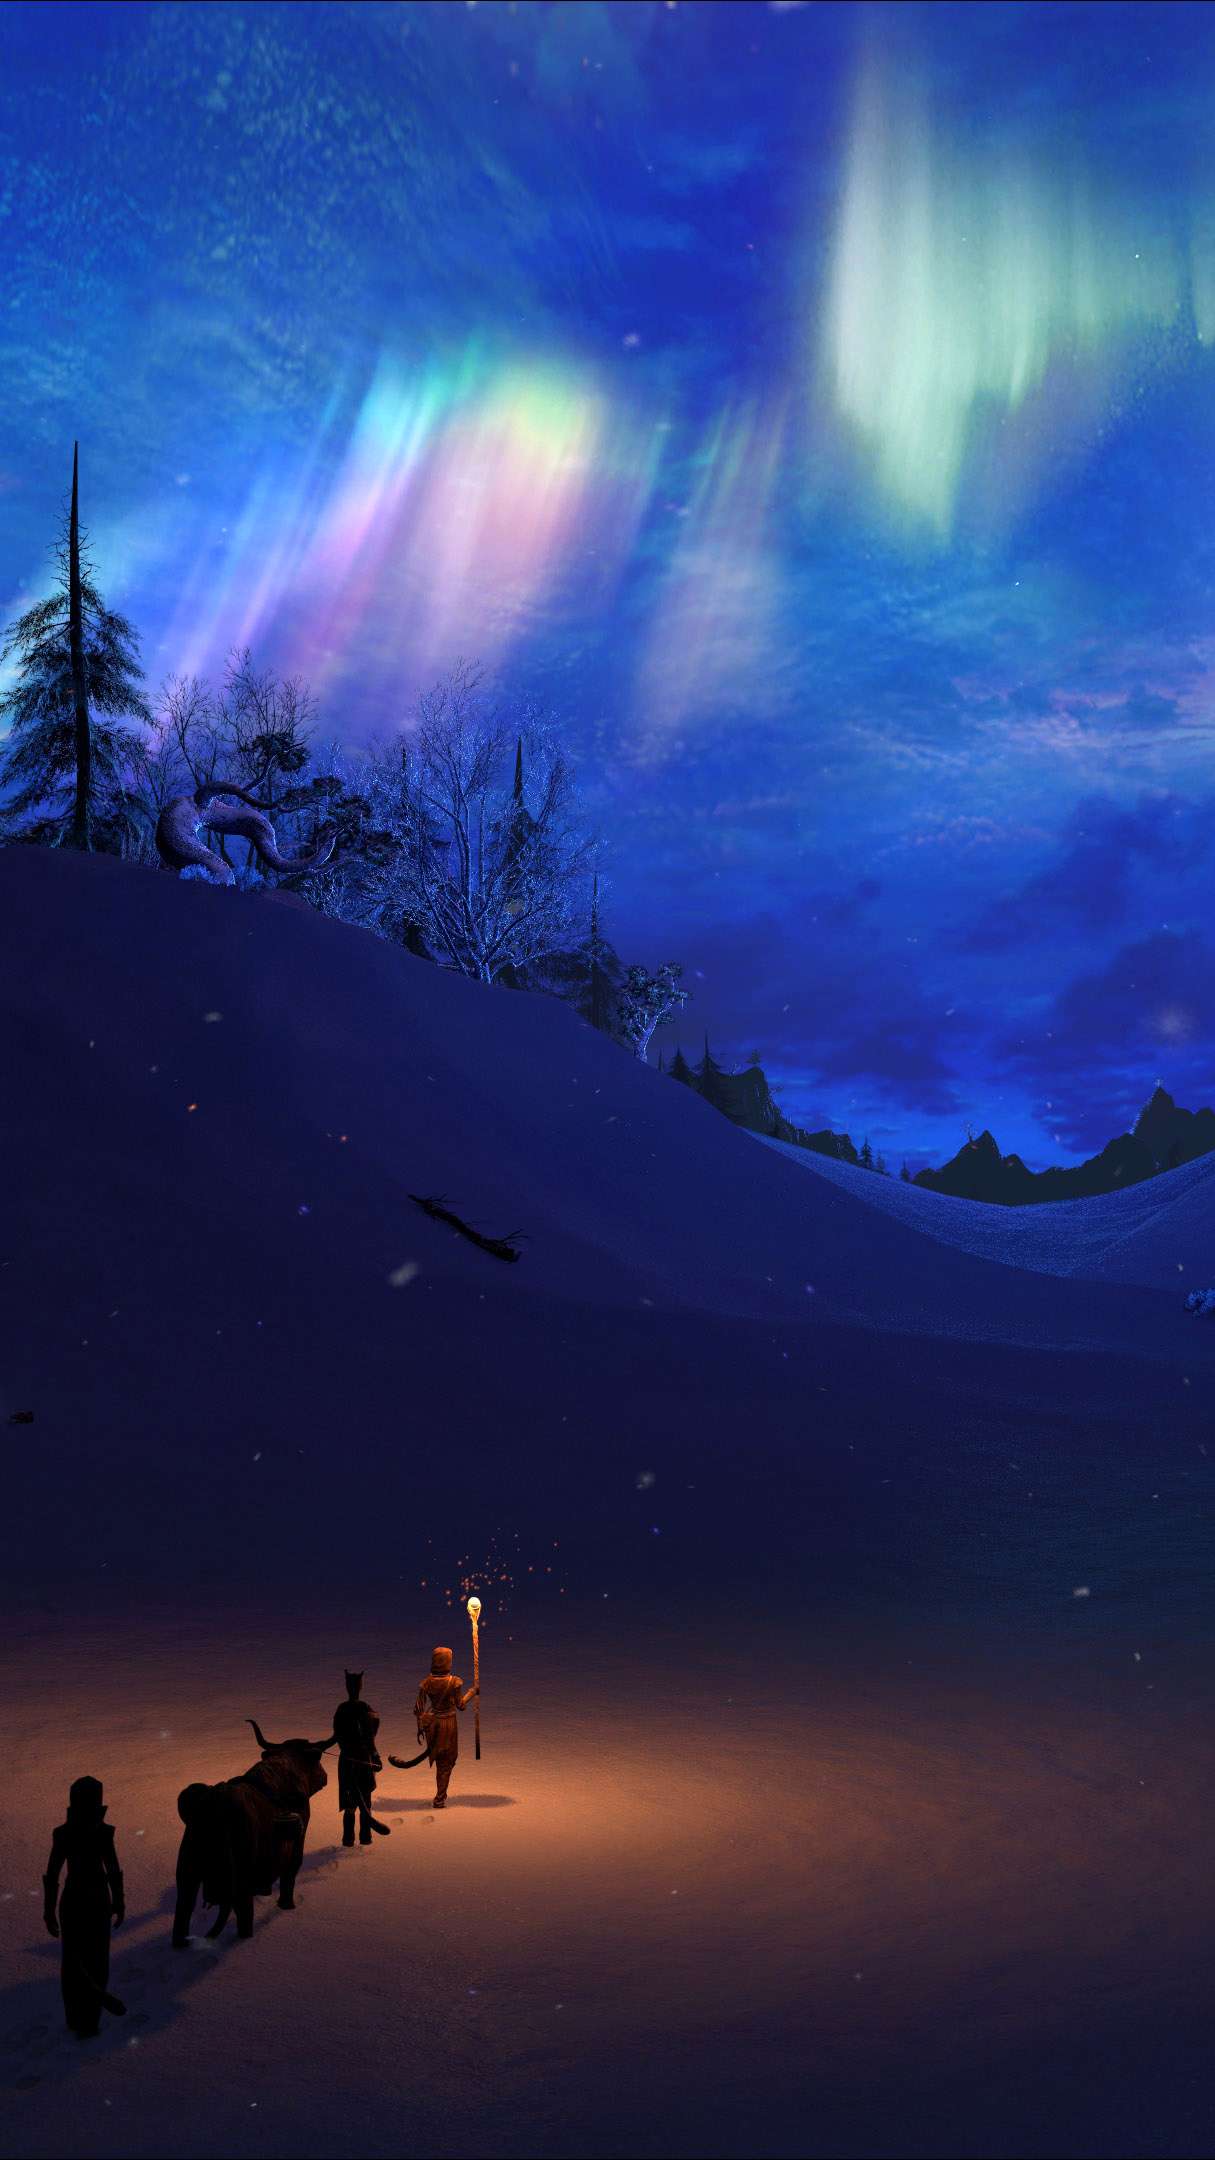 Winter Night North Pole Sky IPhone Wallpaper Wallpaper, iPhone Wallpaper